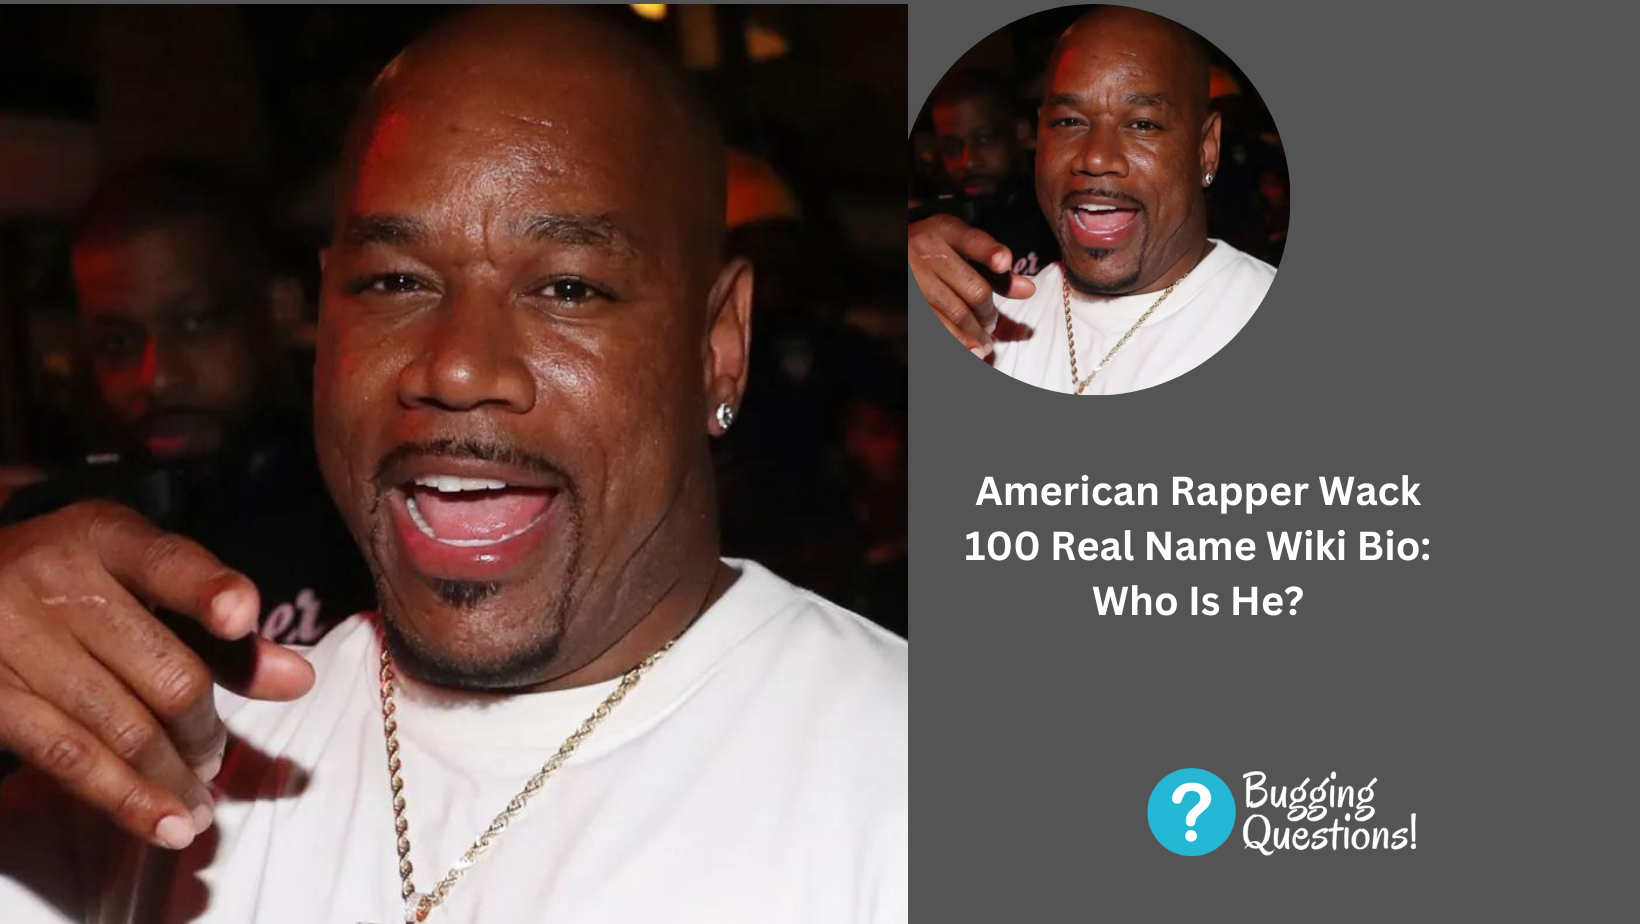 American Rapper Wack 100 Real Name Wiki Bio: Who Is He?